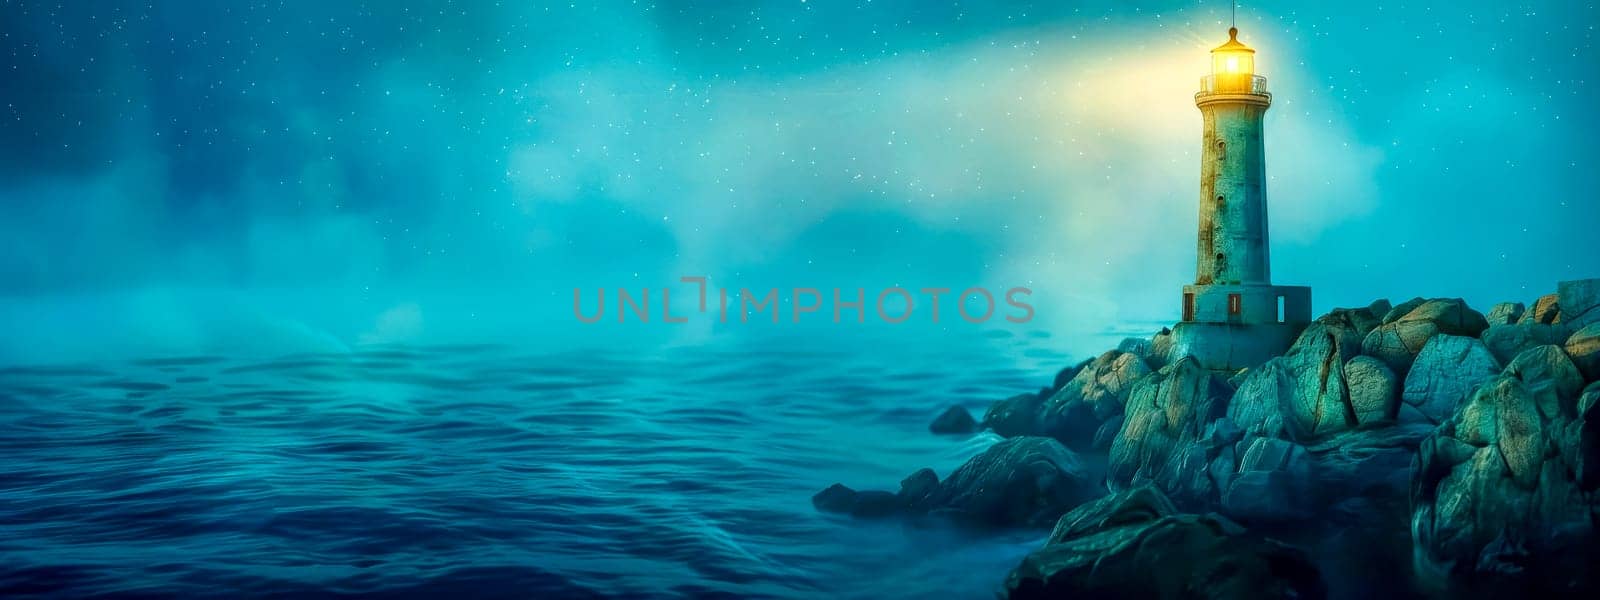 Mystical lighthouse illuminating night seascape, copy space by Edophoto